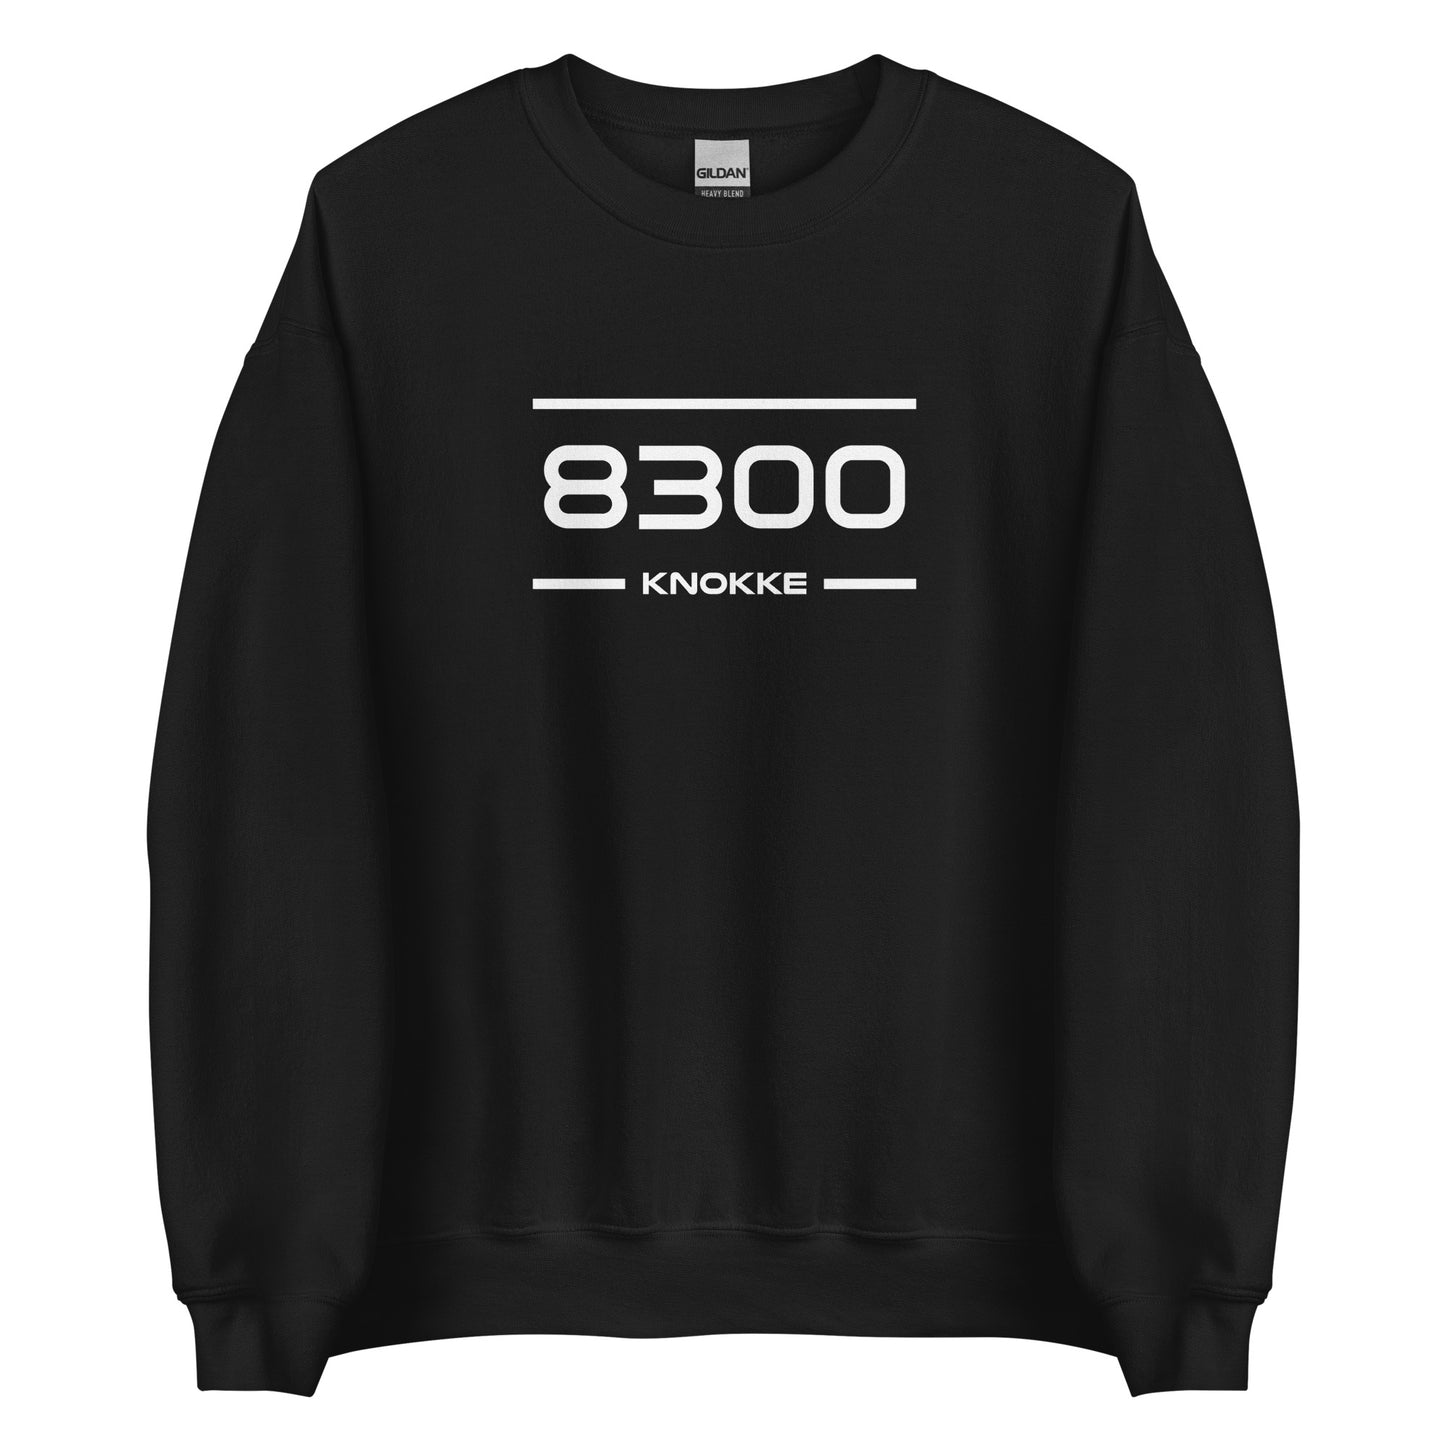 Sweater - 8300 - Knokke (M/V)